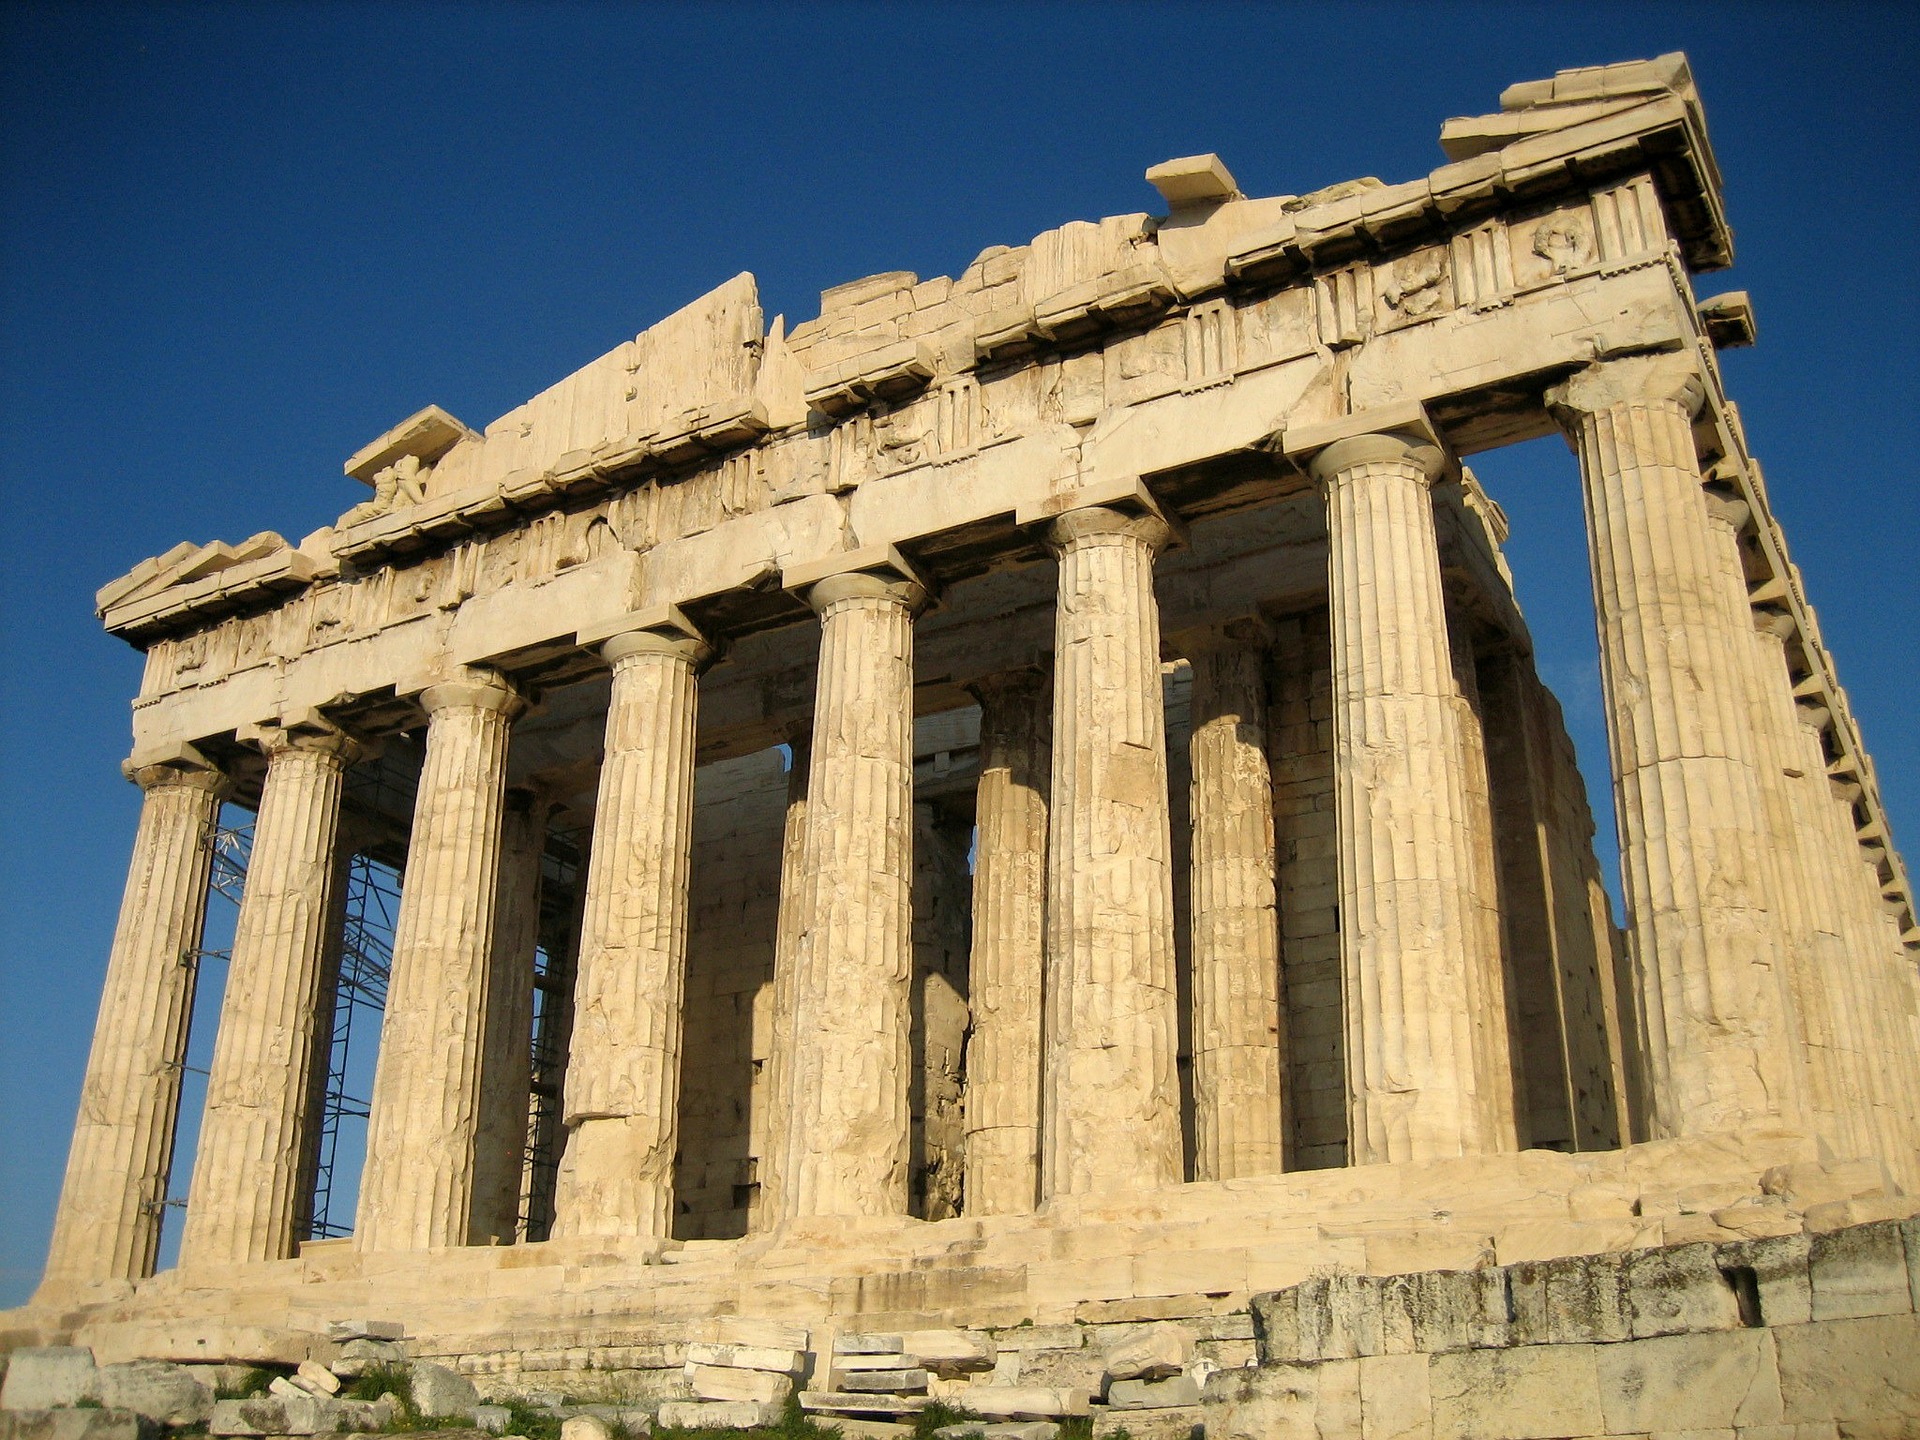 Standing on Acropolis hill, Parthenon is Athens' iconic landmark